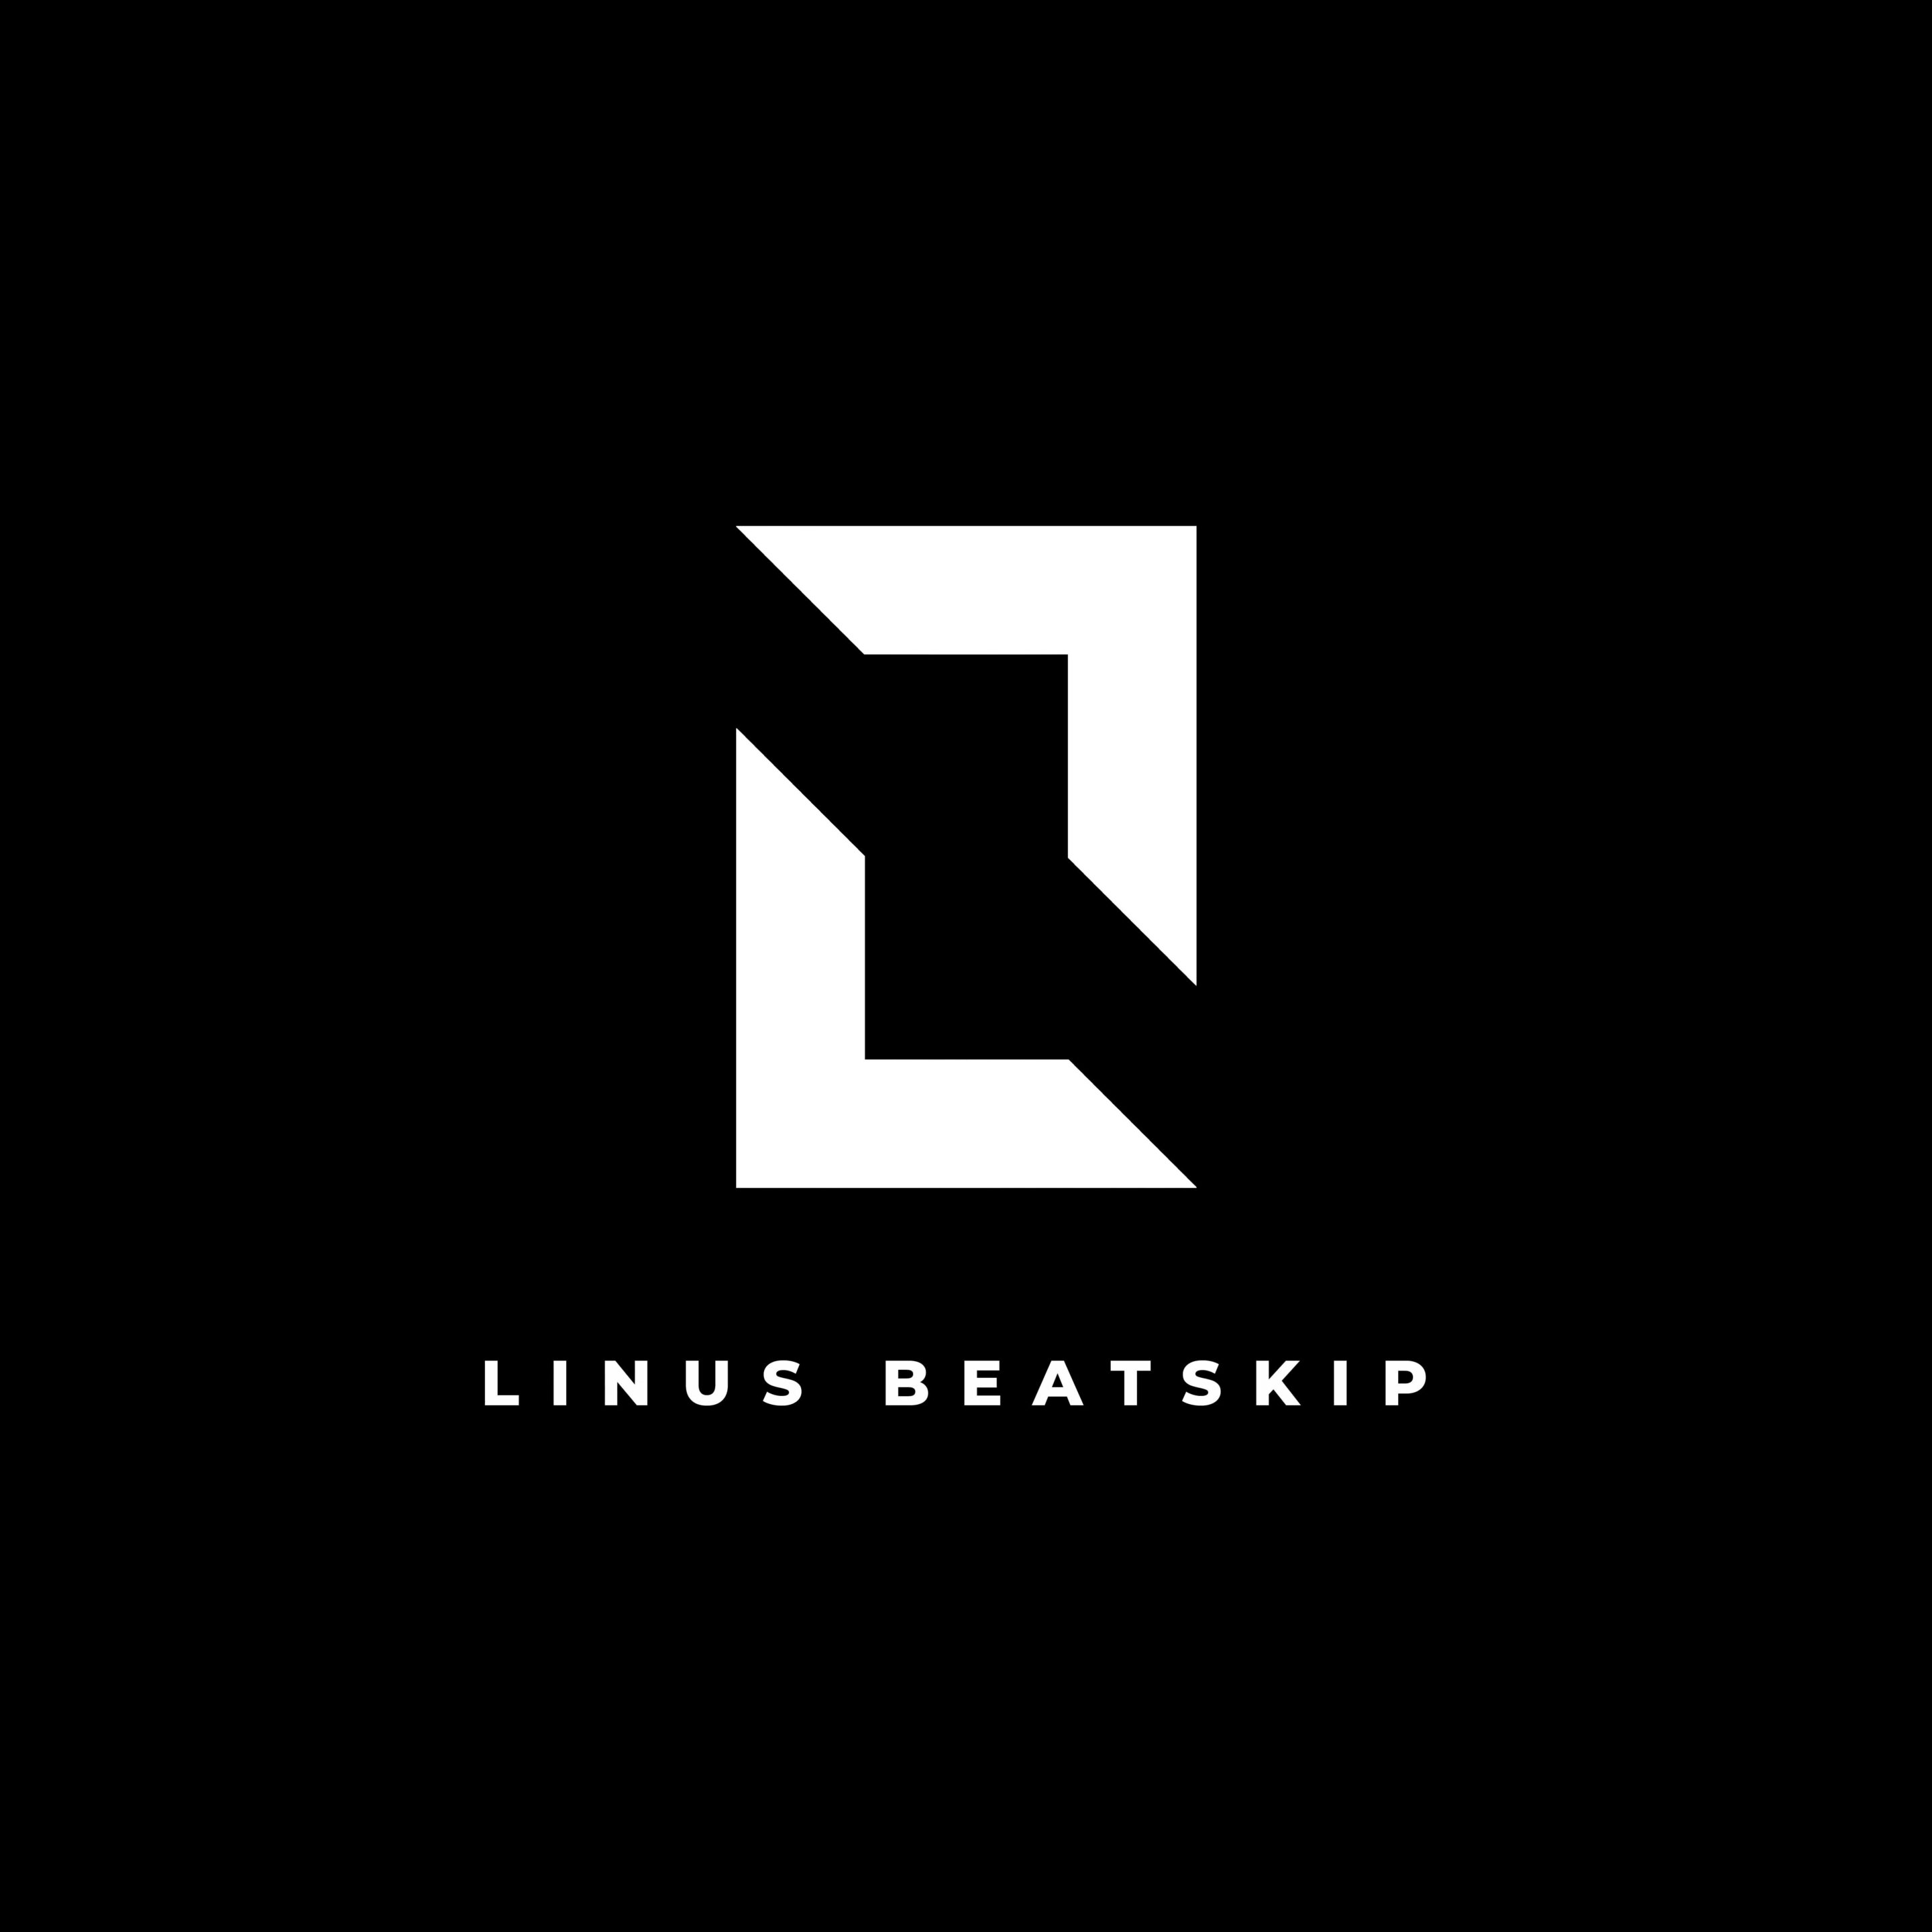 Linus Beatskip